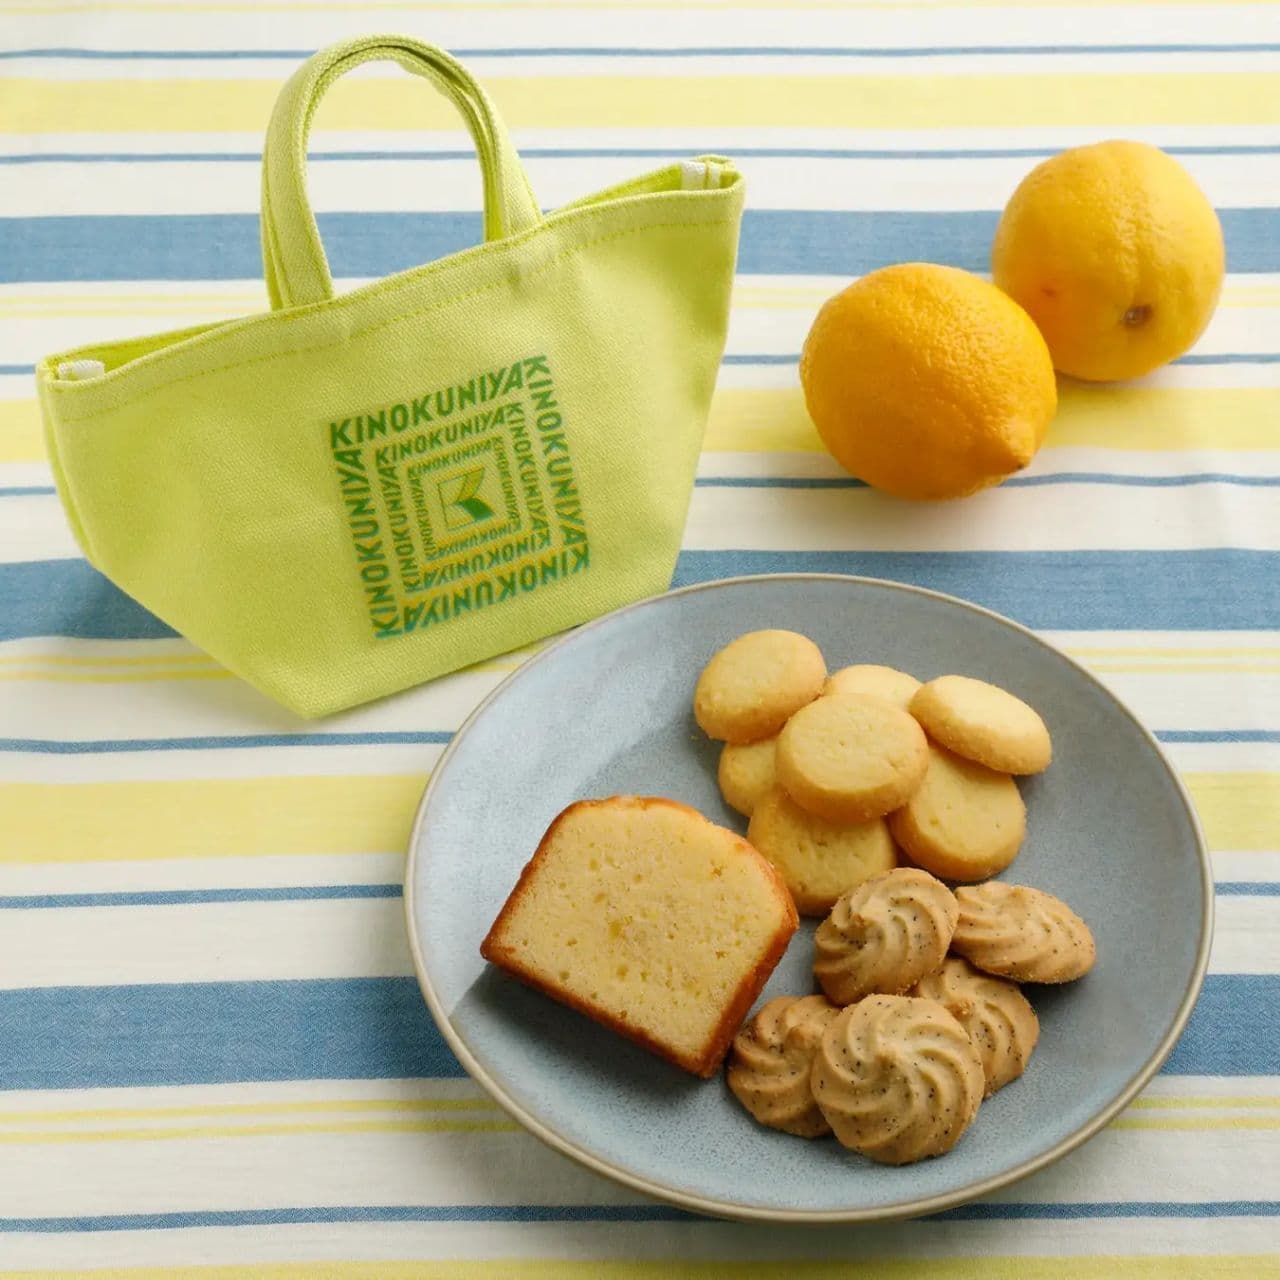 KINOKUNIYA "Lemon Sweets Bag